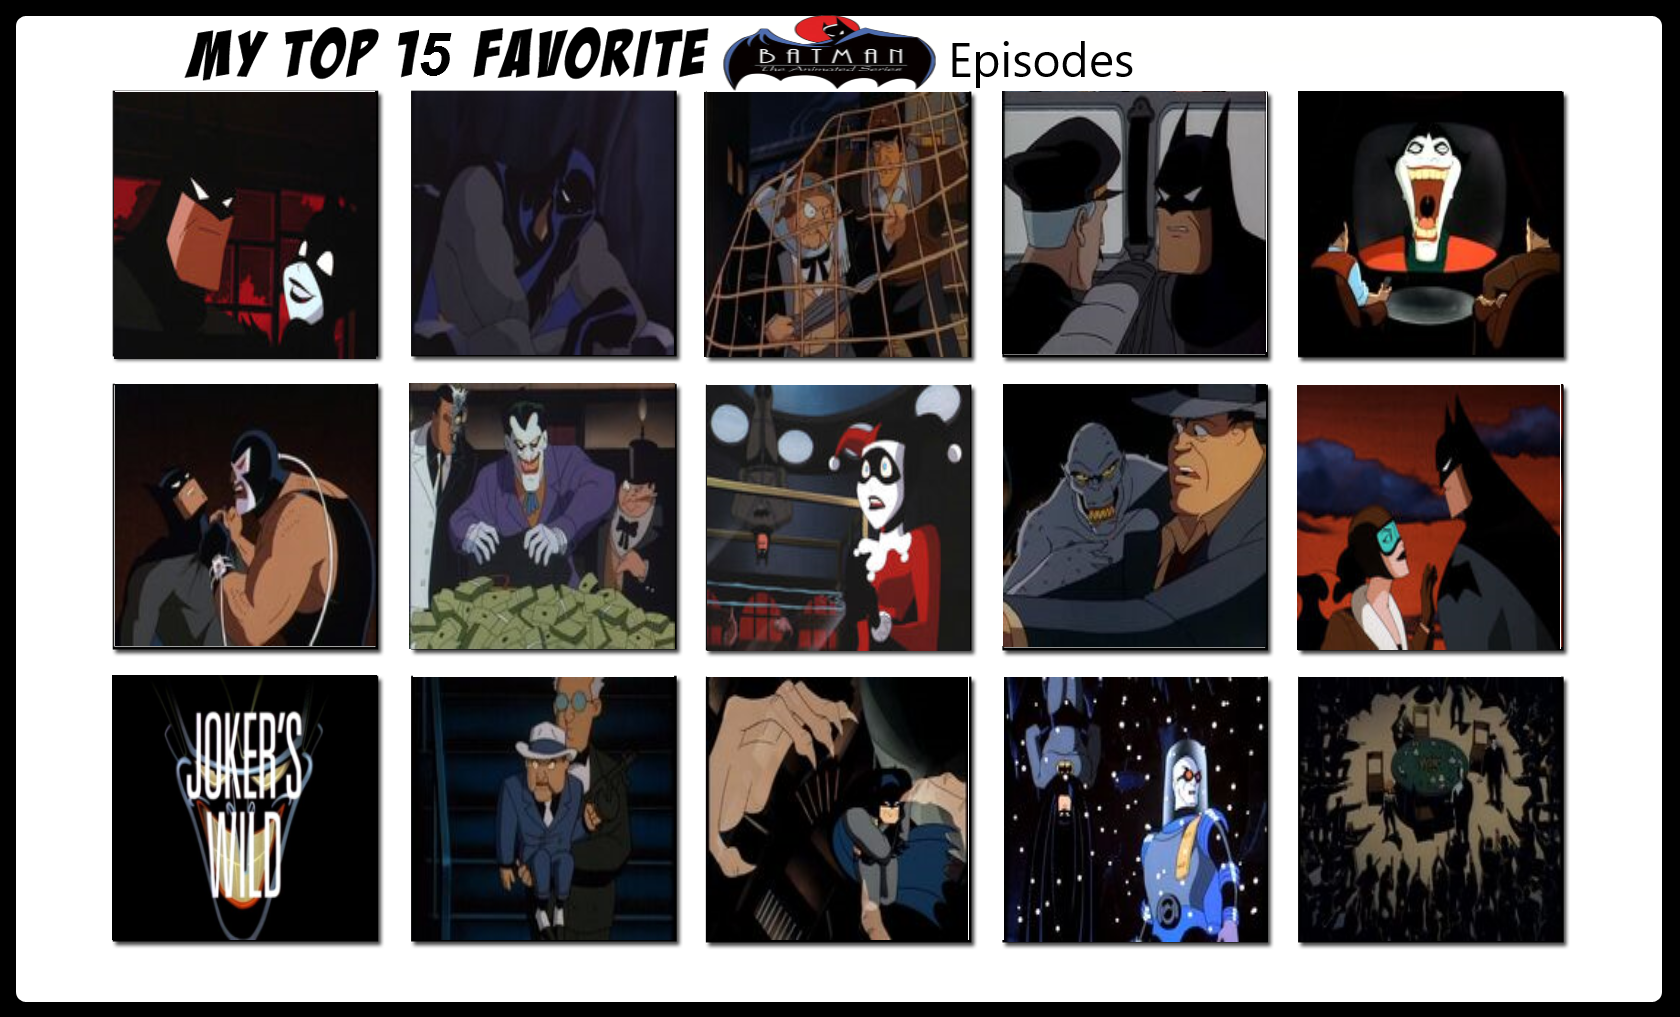 Flytte Latterlig Minister Bolinha644's Top 15 Favorite Batman TAS Episodes by Bolinha644 on DeviantArt